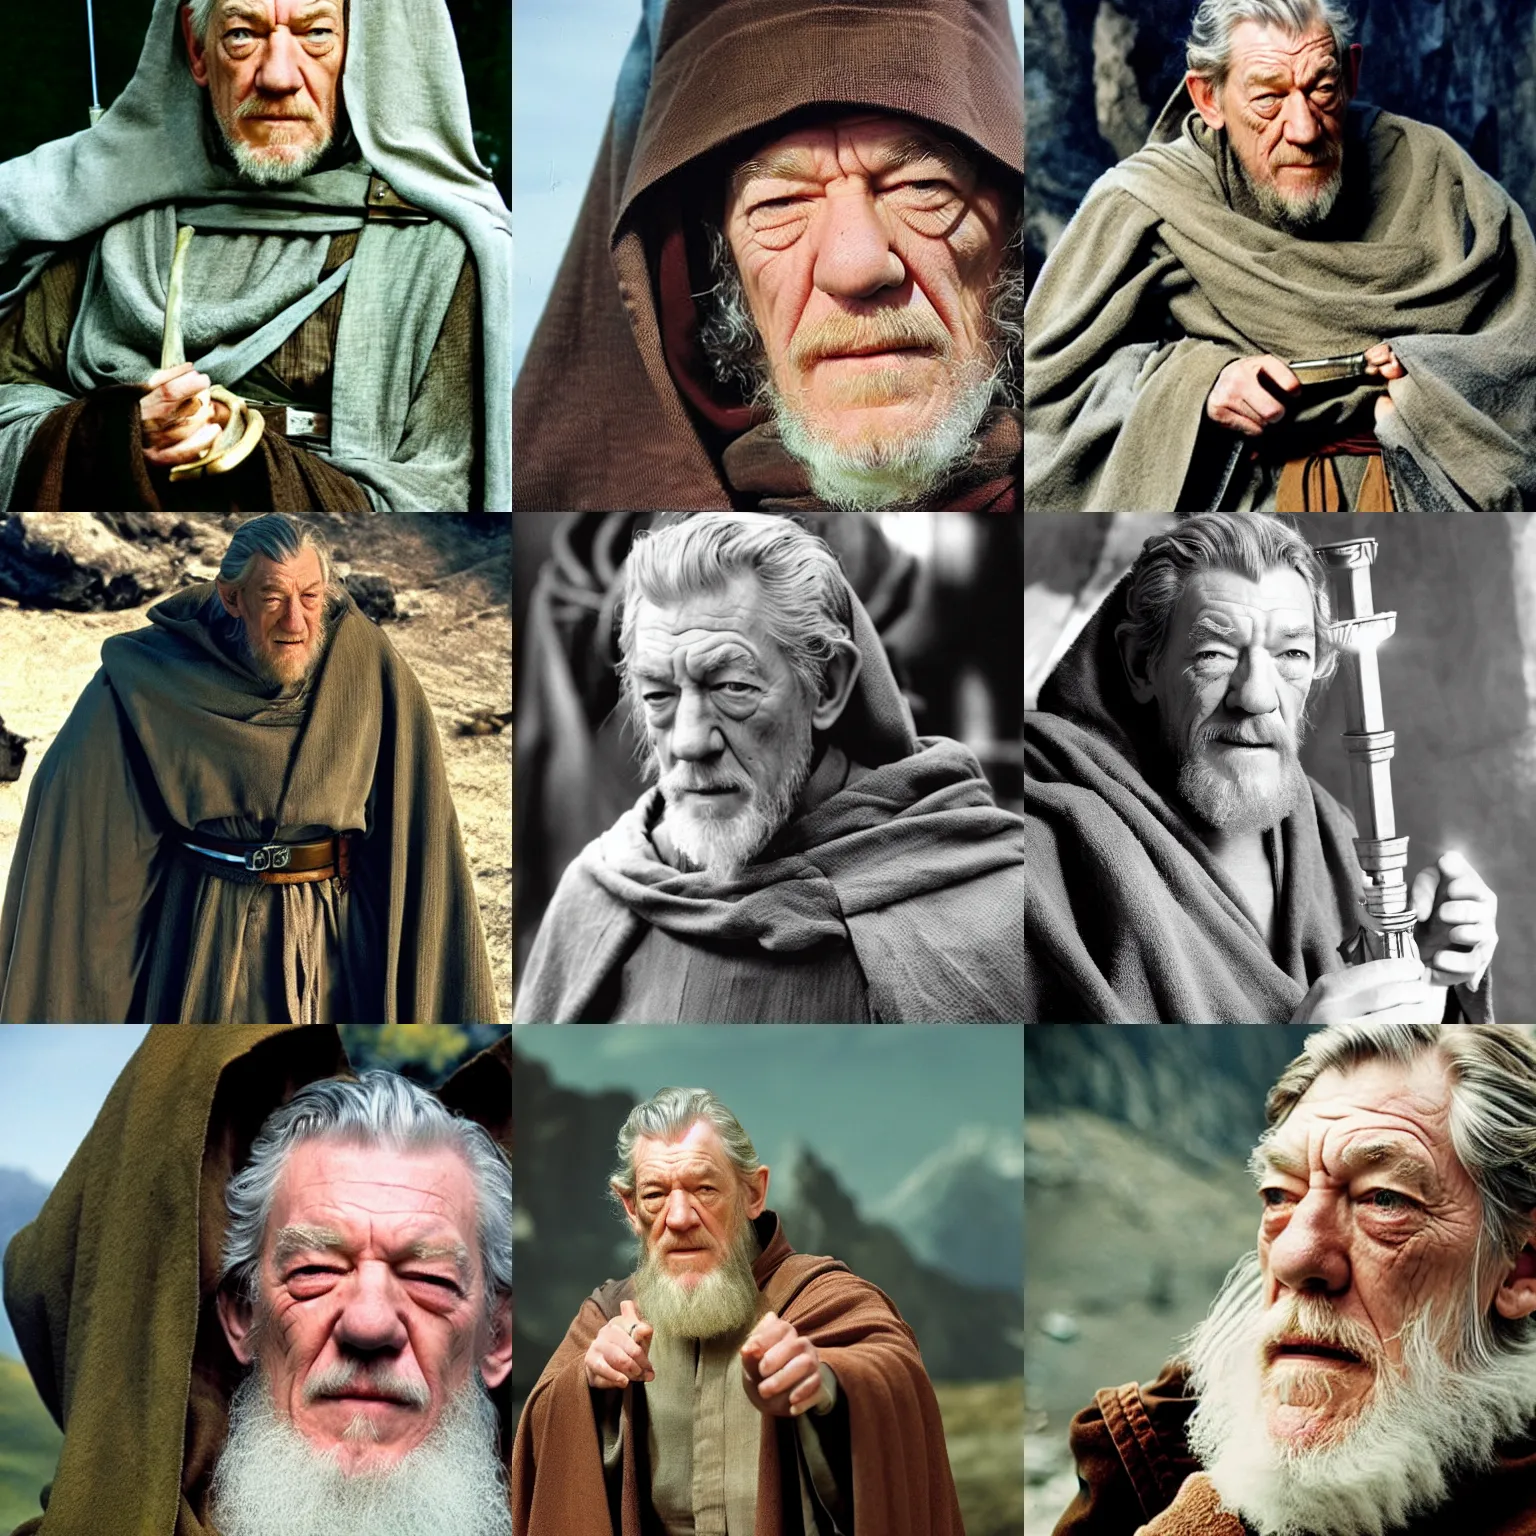 Prompt: Ian McKellen as Obi-Wan Kenobi on the set of Lord of the Rings